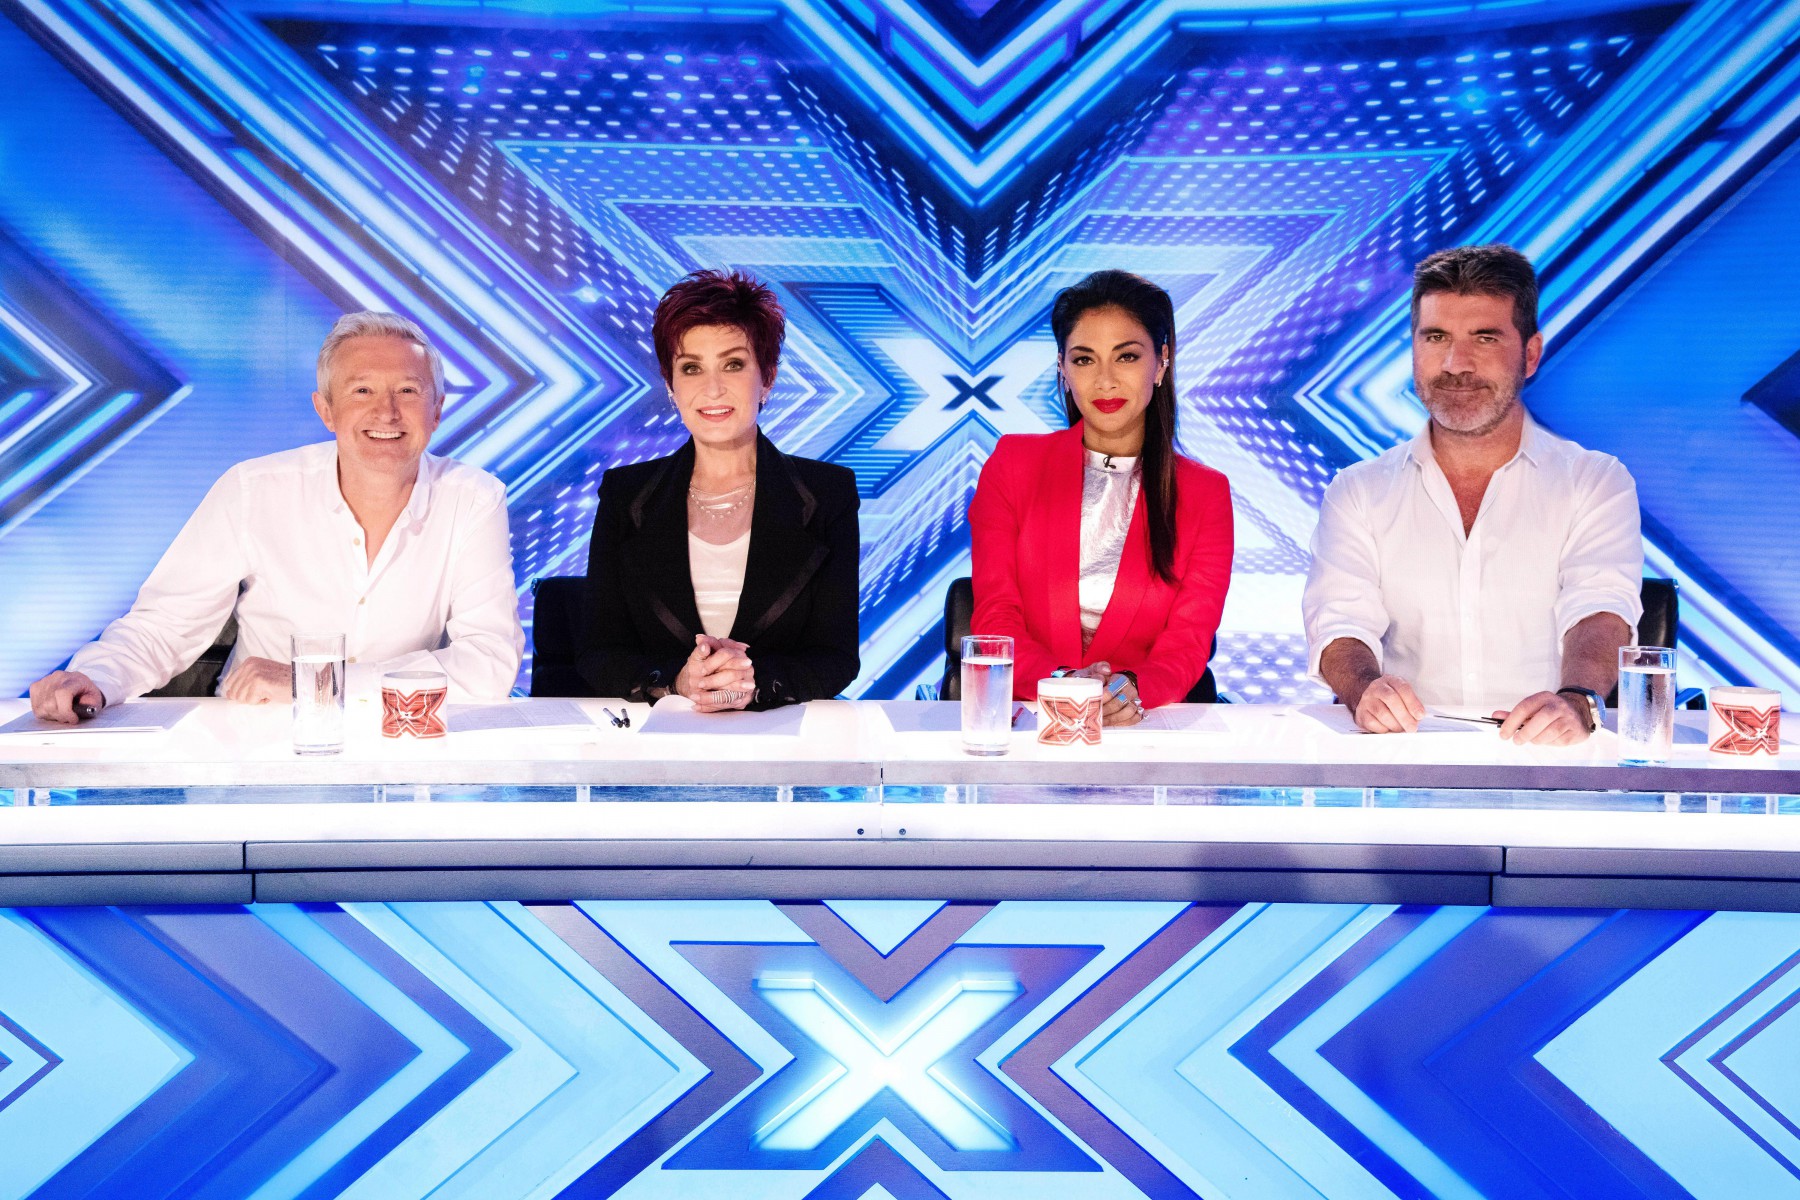 The 2017 X Factor panel features Simon Cowell, Louis Walsh, Nicole Scherzinger and Sharon Osbourne